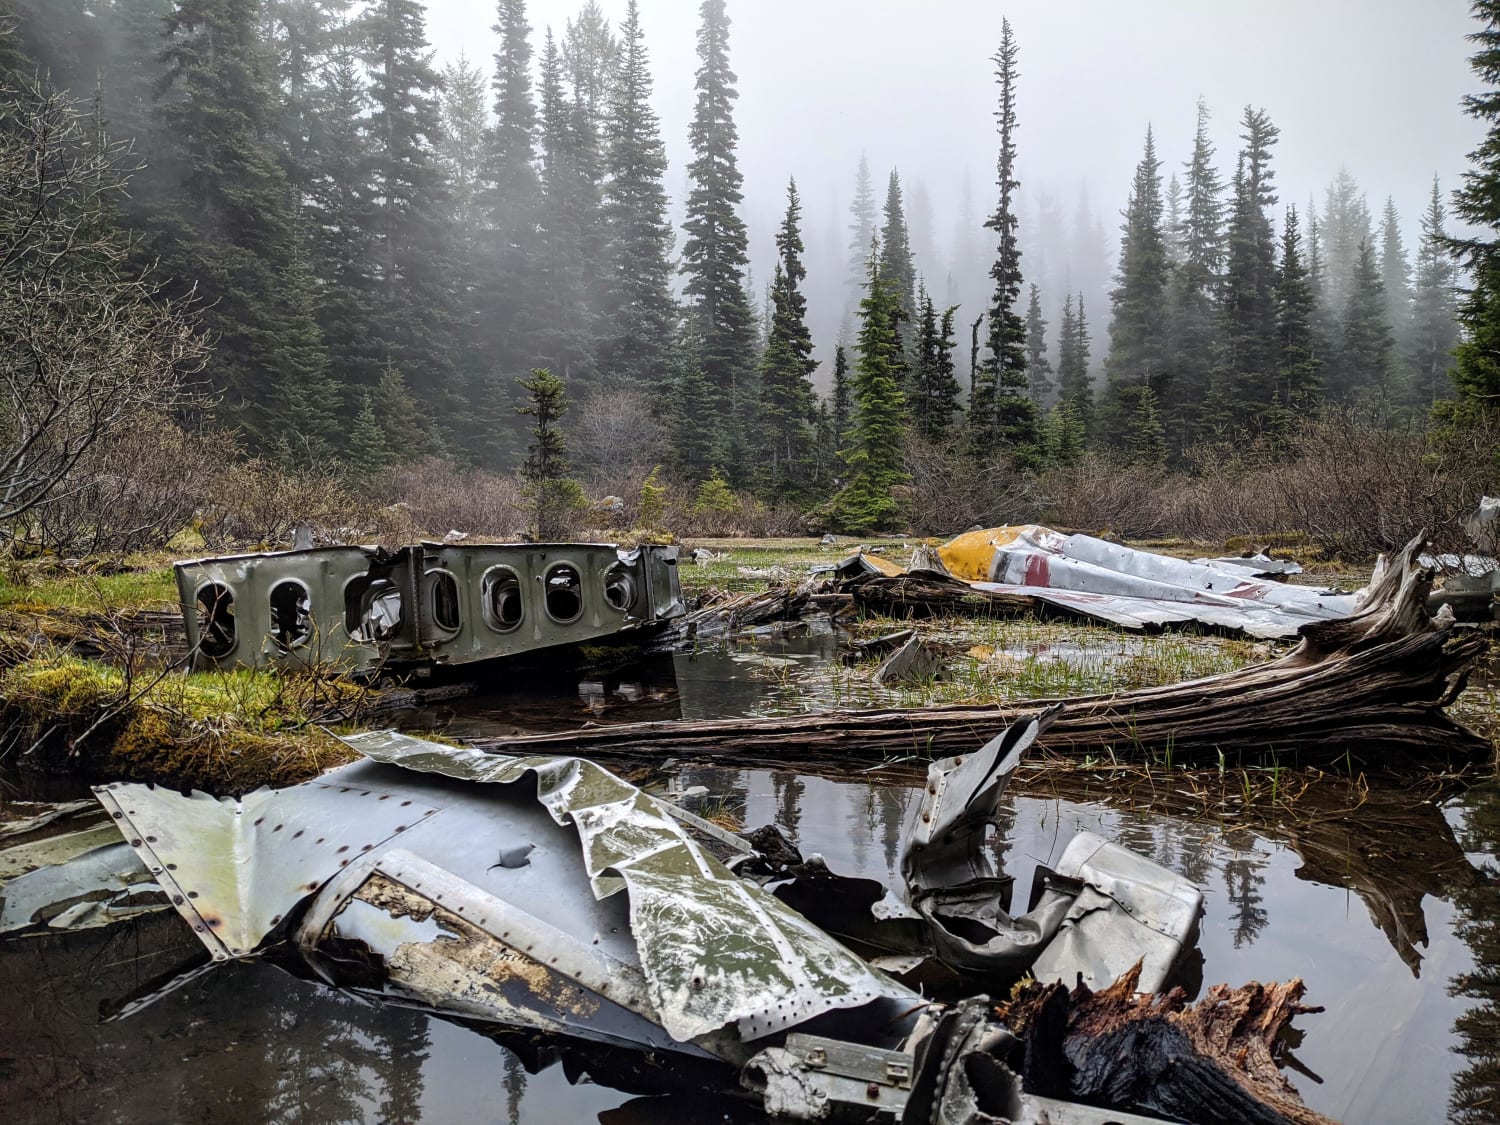 Wreckage from a 1952 B-17 crash. Buckhorn Wilderness, Olympic National Forest, Washington, USA